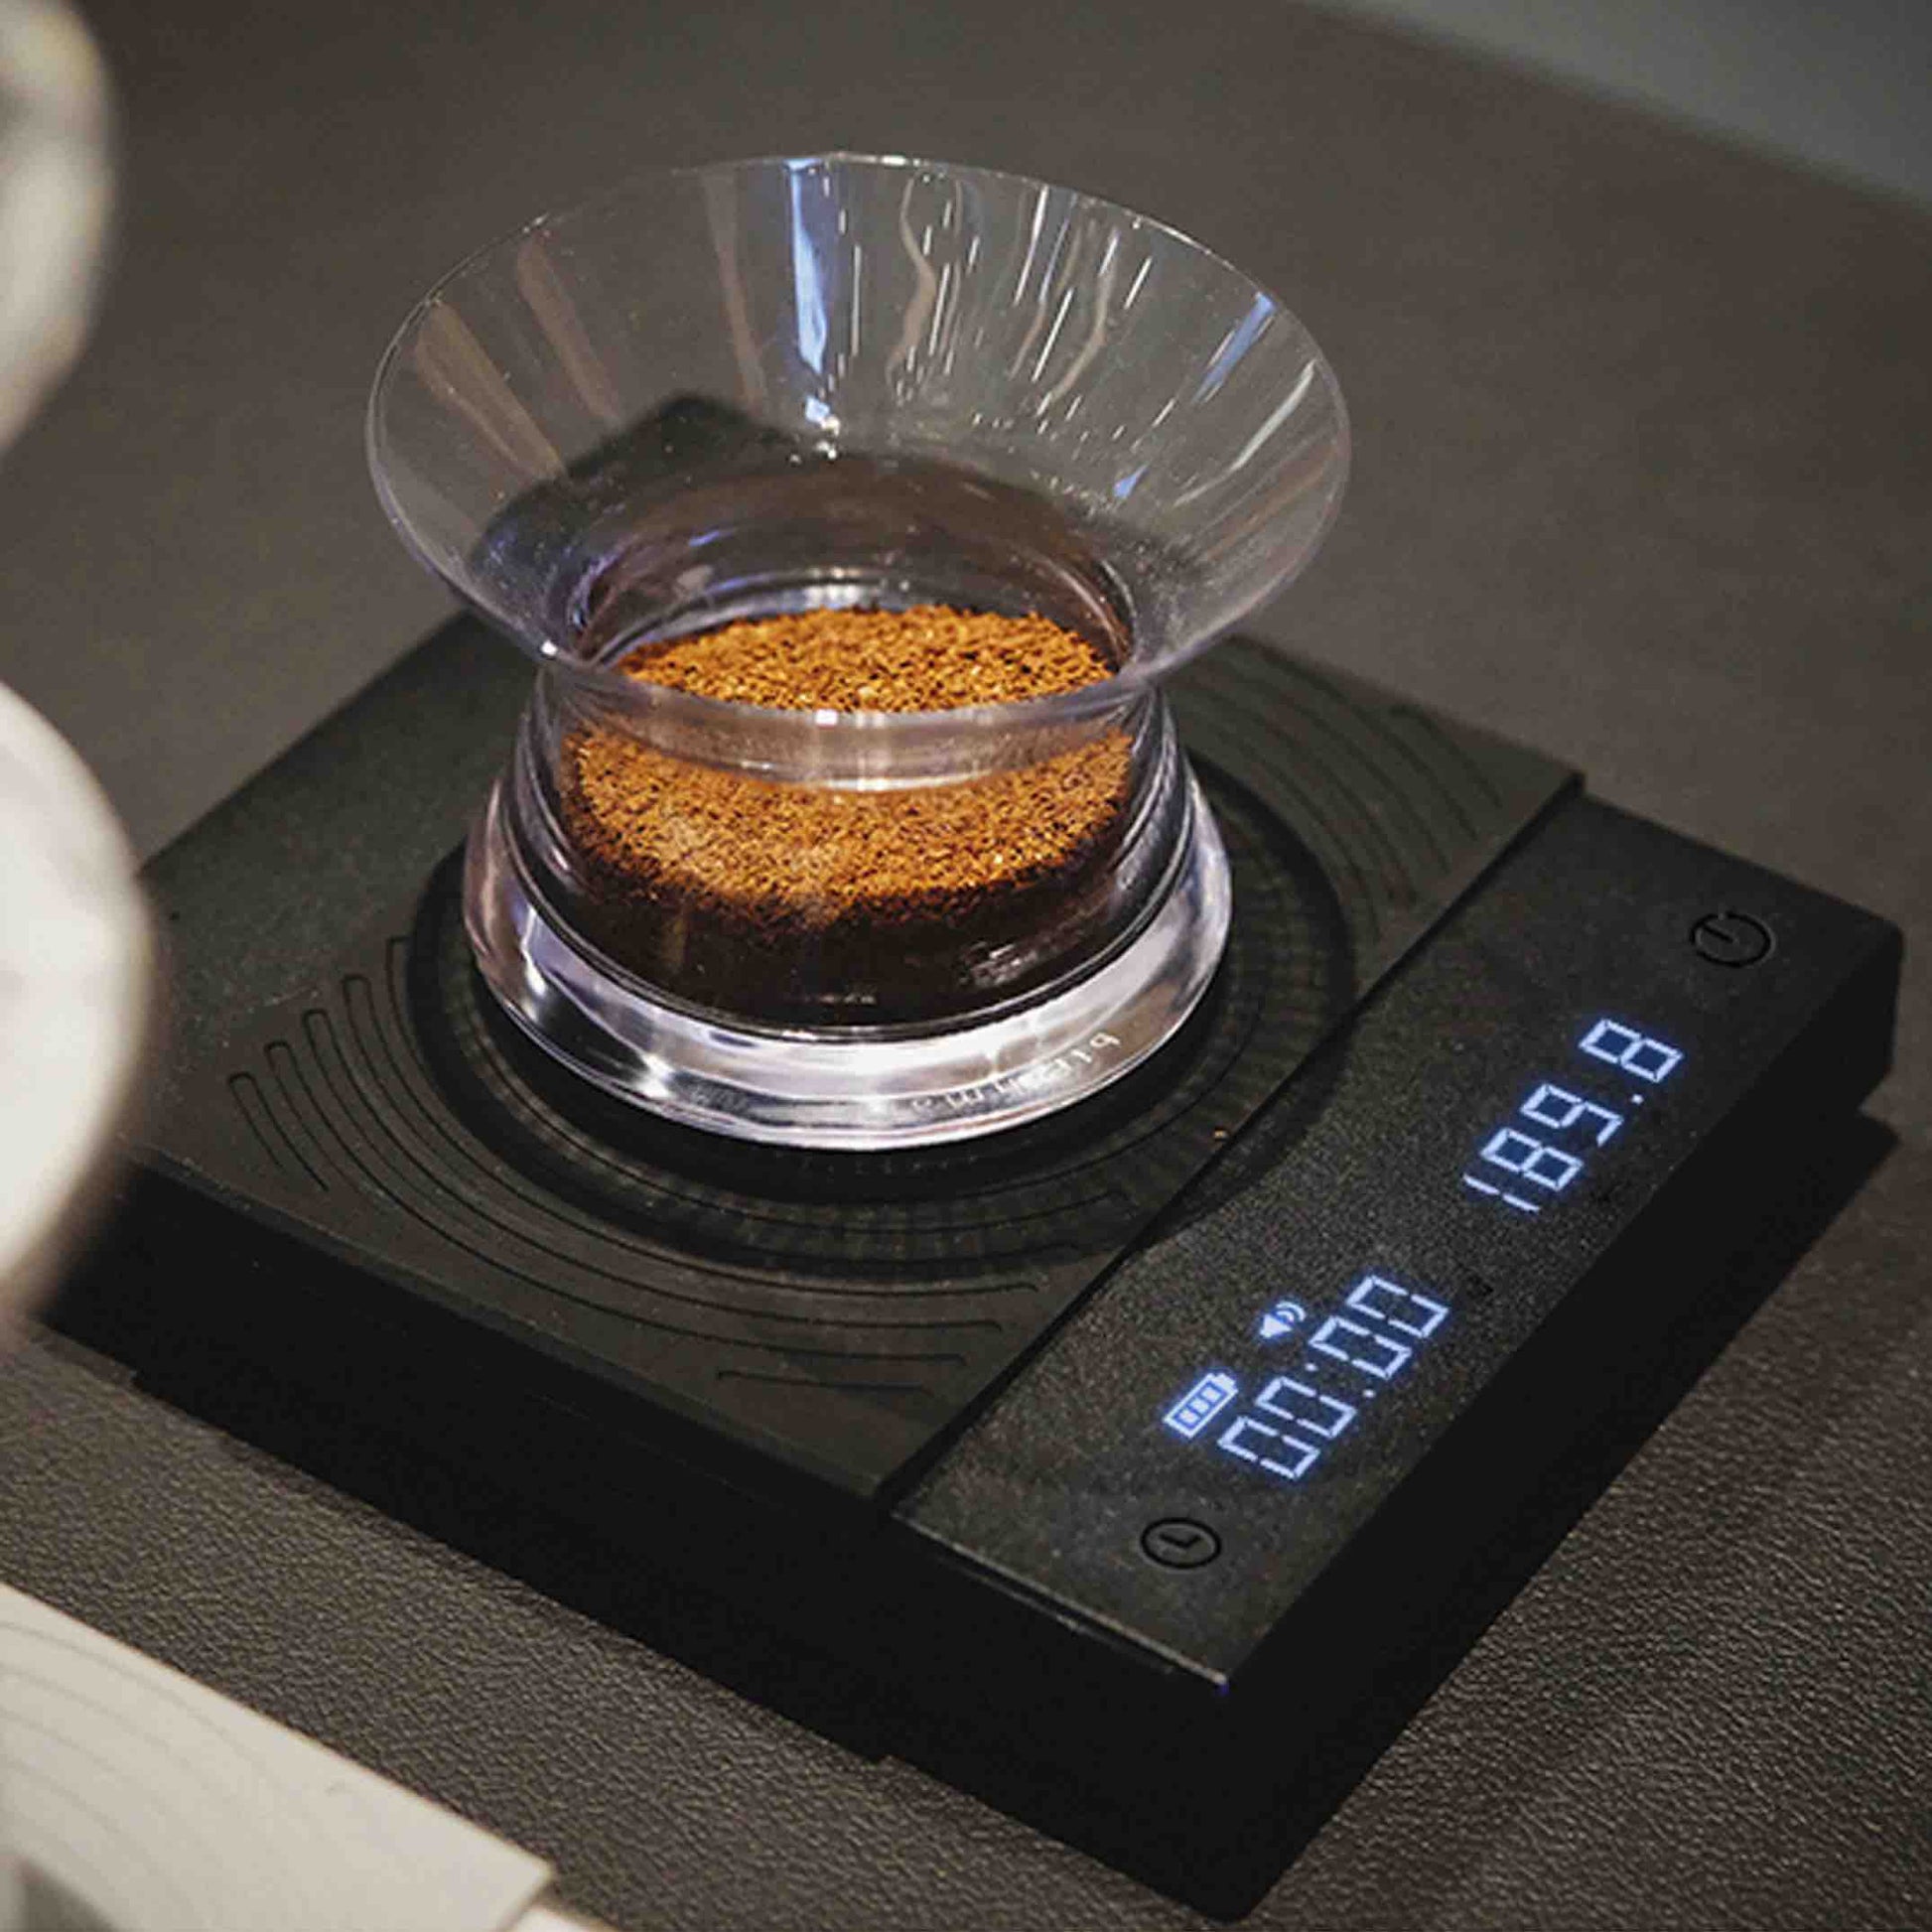 Black Mirror Basic 2 Coffee and Espresso Scale